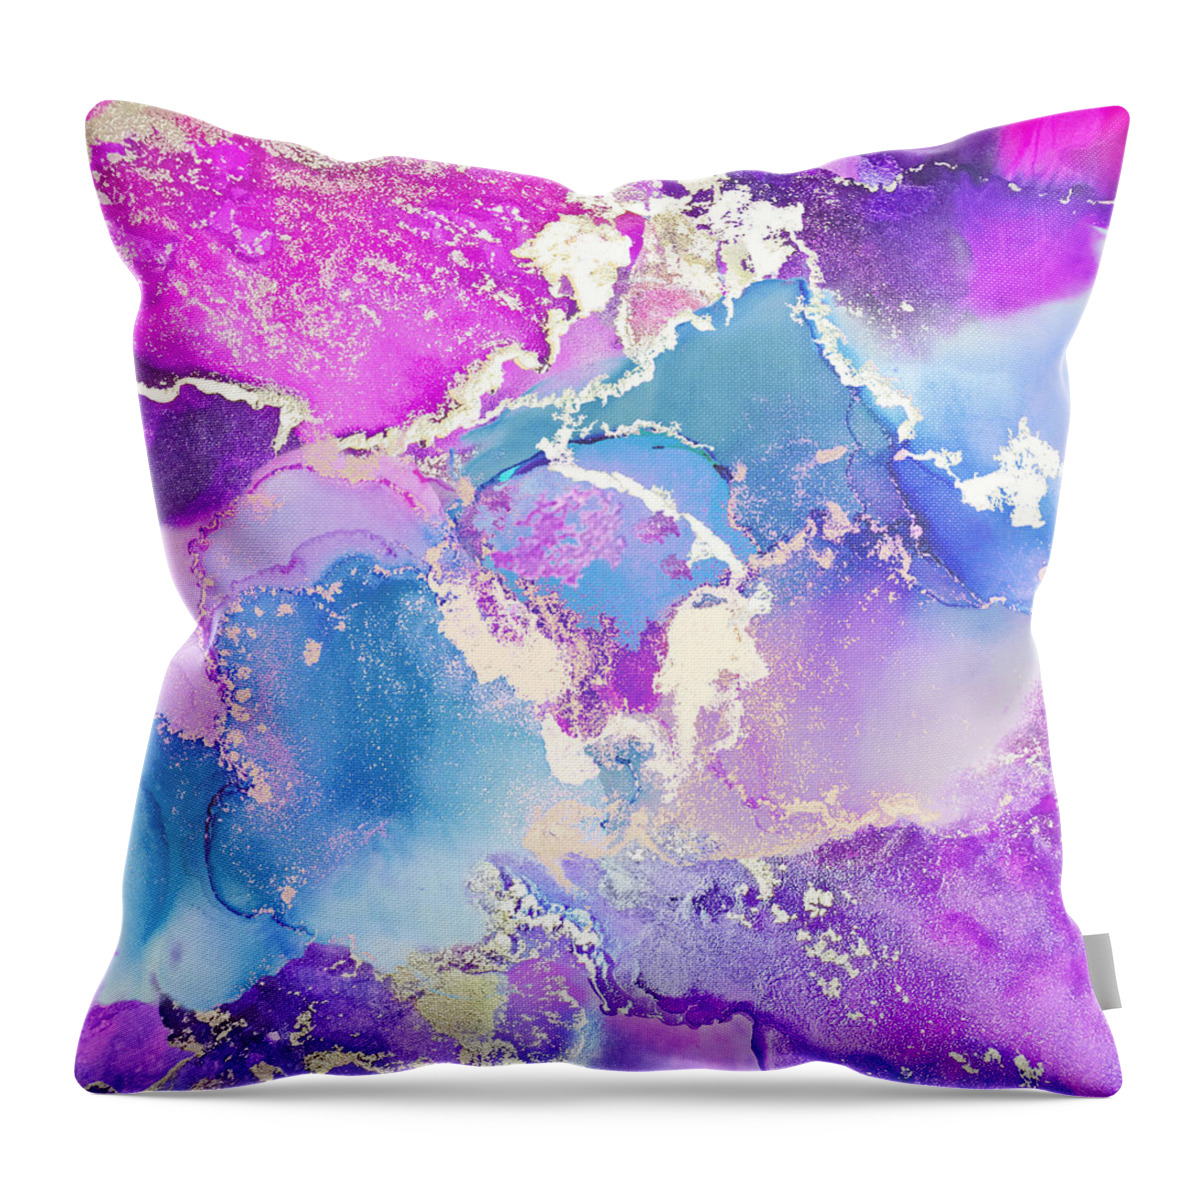 Magenta Throw Pillow featuring the digital art Uplifting by Linda Bailey